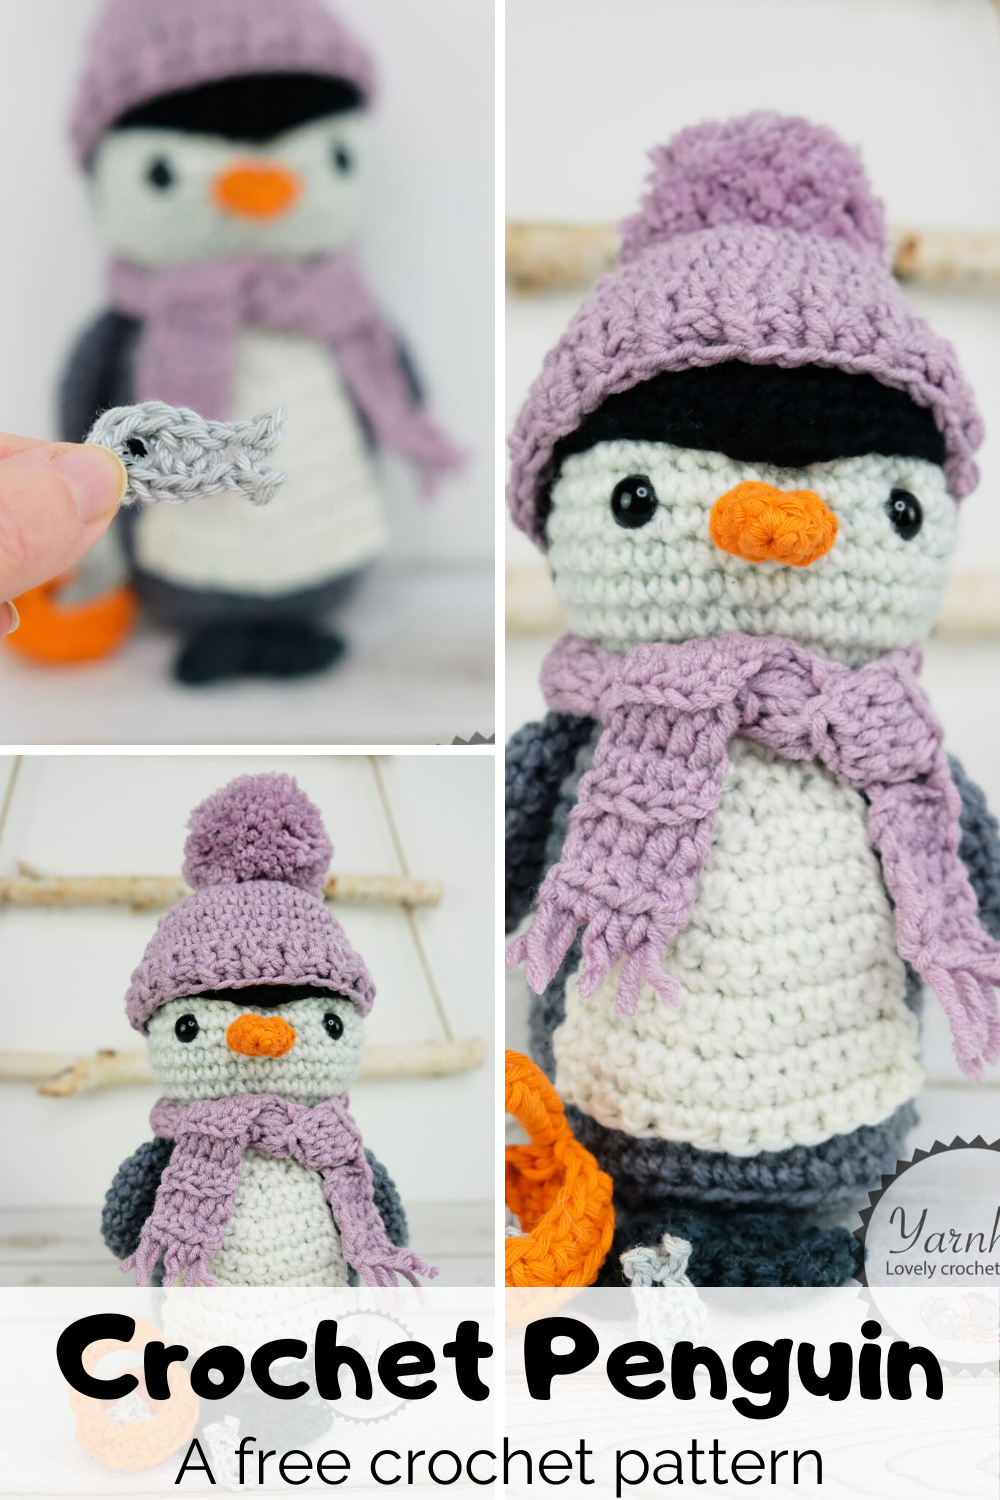 Crochet an amgurumi penguin - Easy and cute crochet penguin pattern